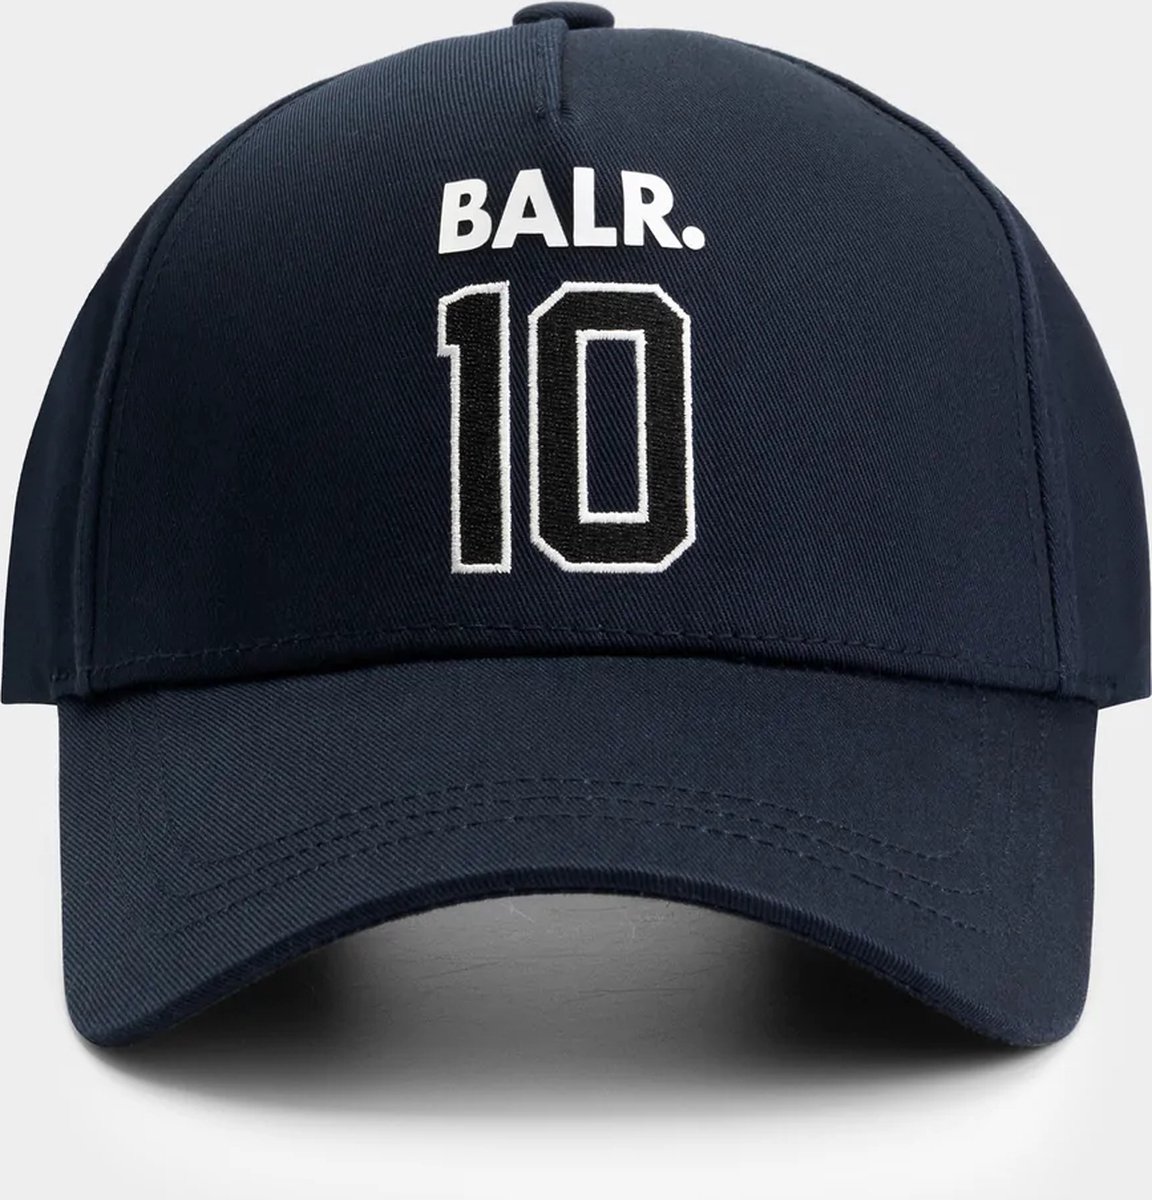 BALR. Classic 10 Cap Navy Blazer